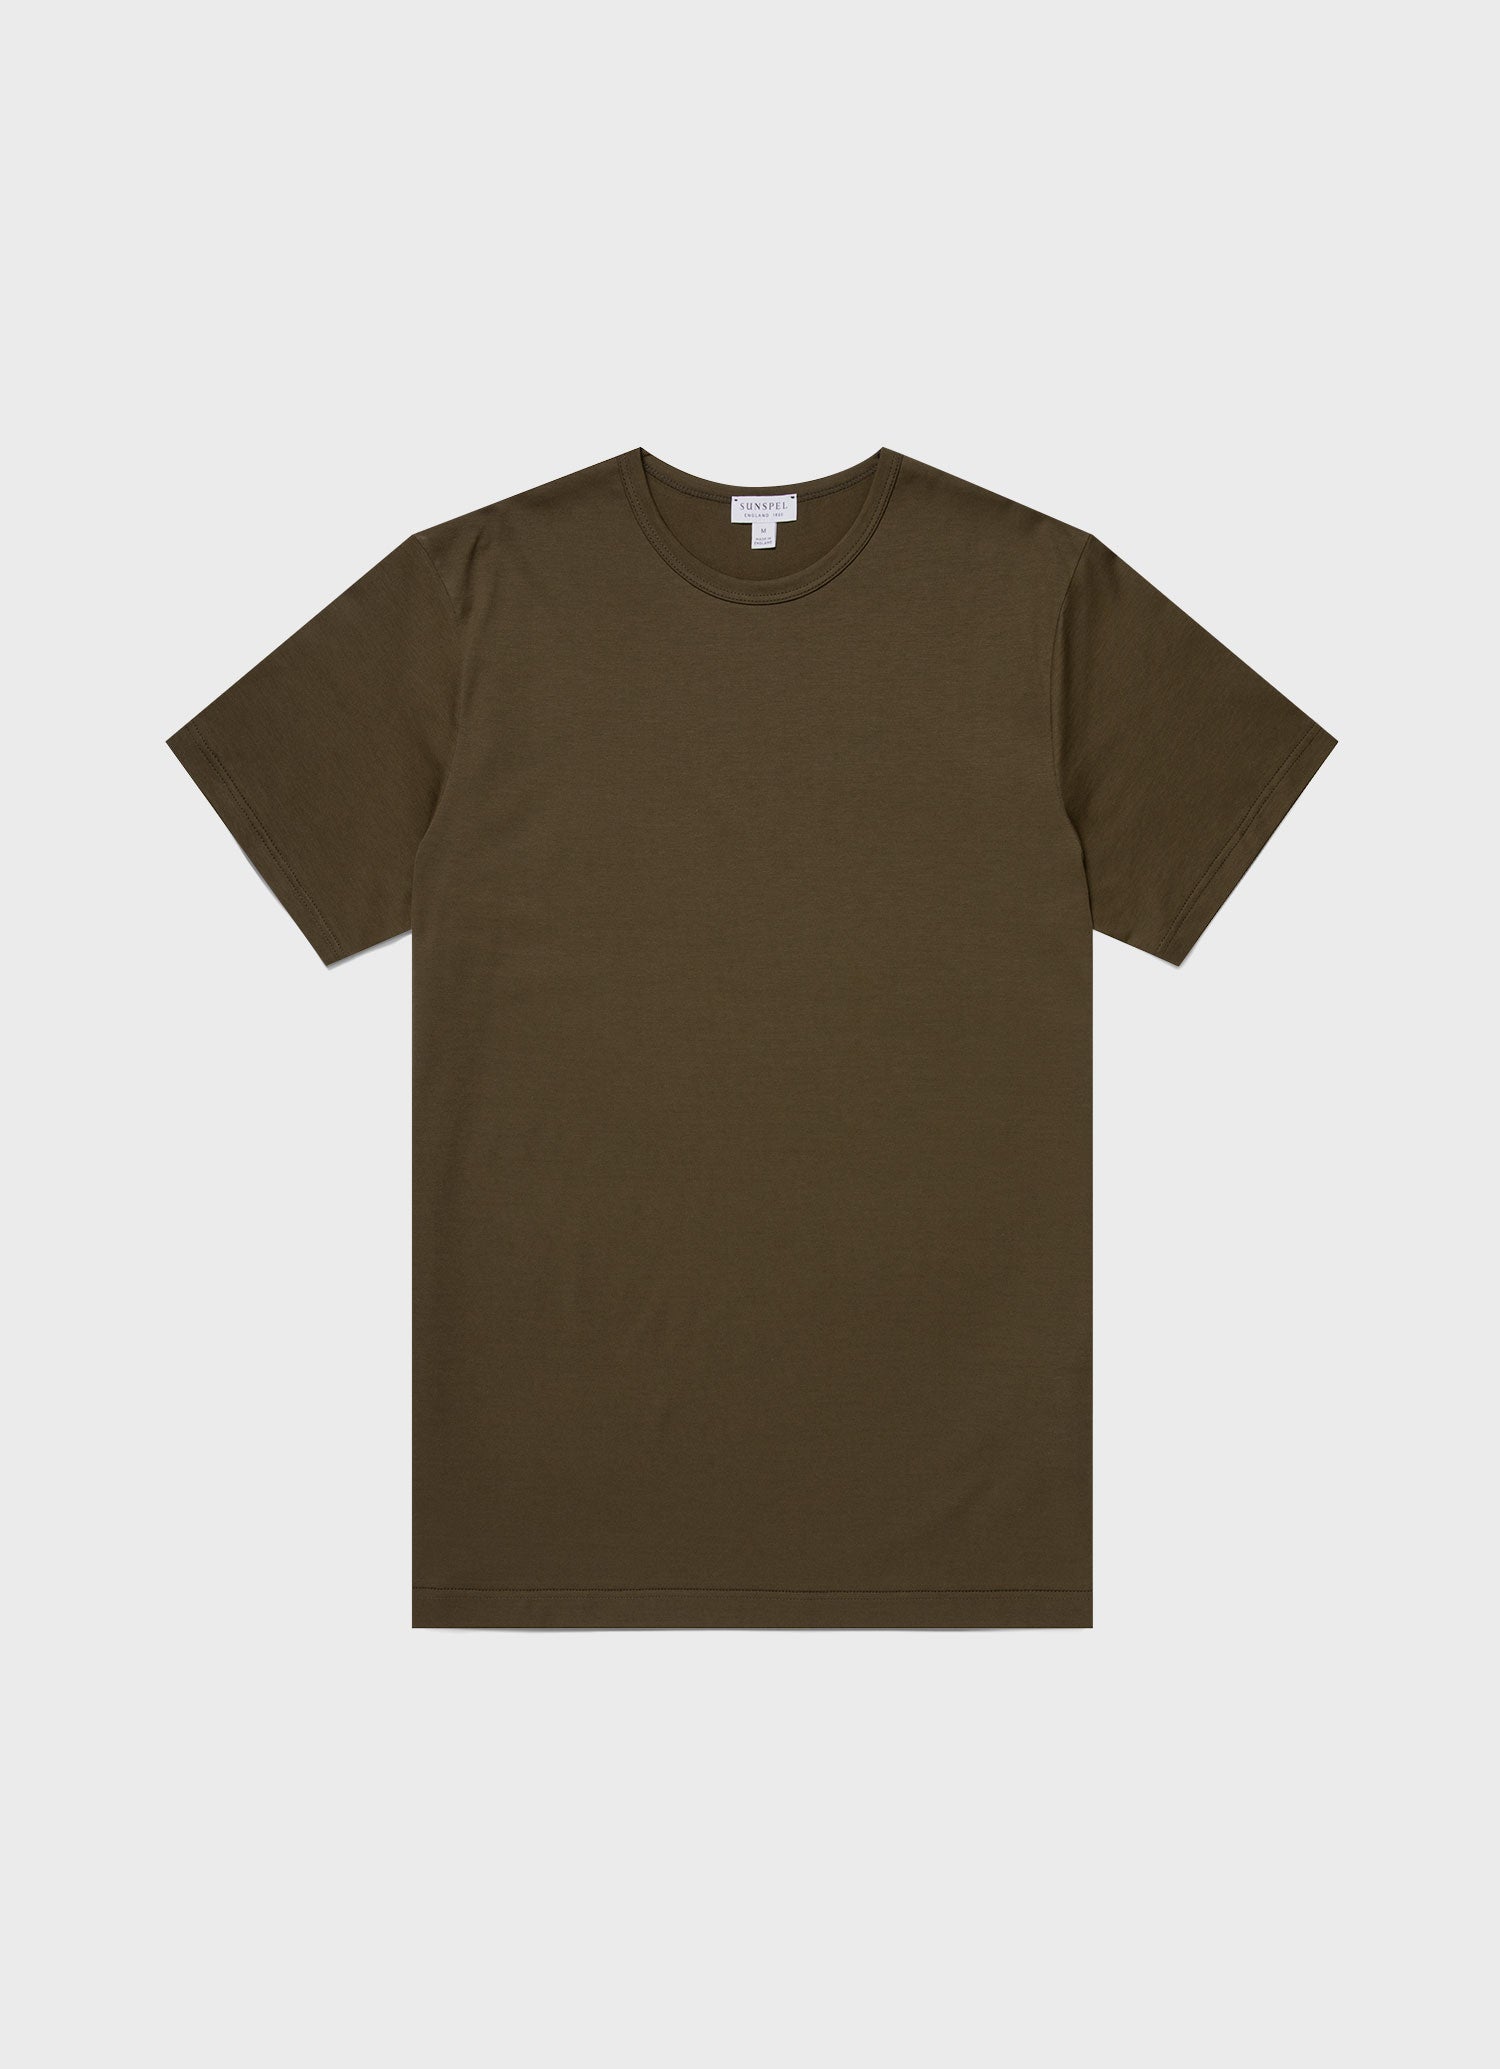 T-shirt Men\'s in Olive Classic Dark Sunspel |